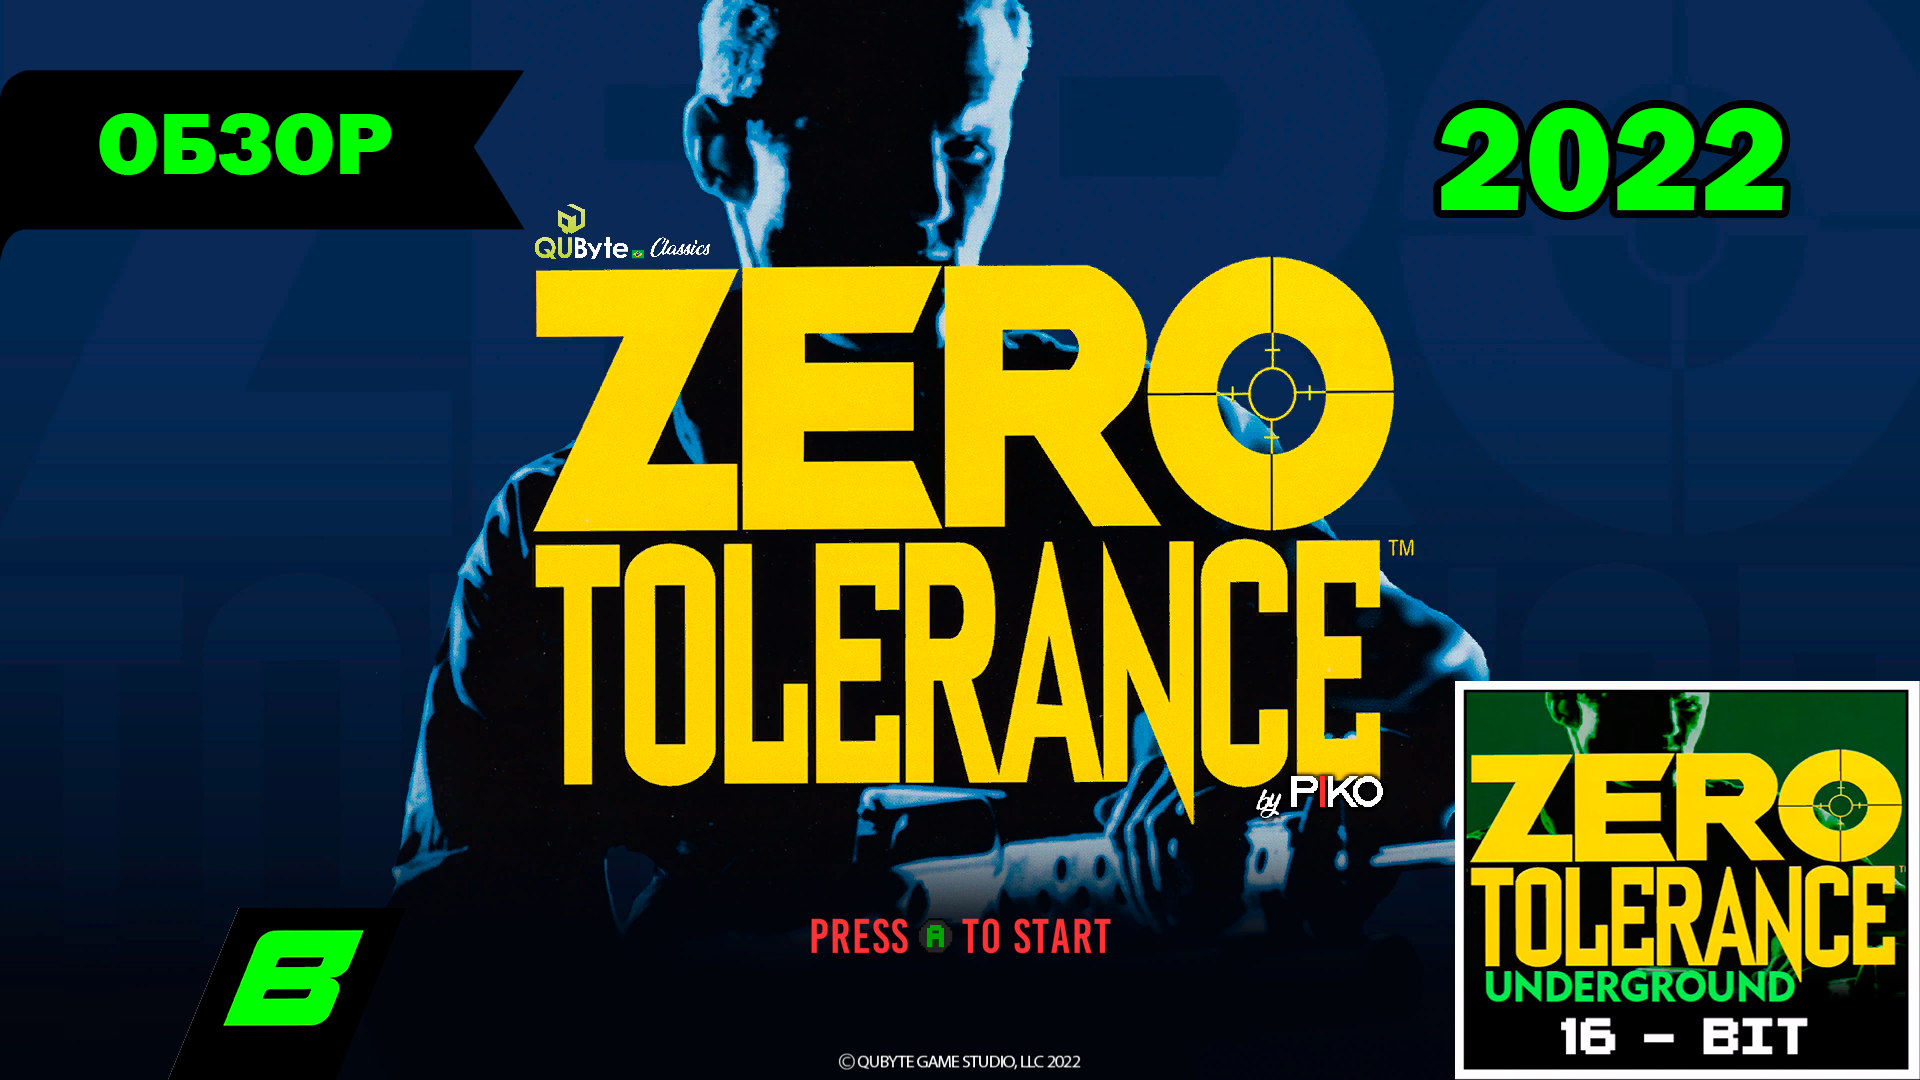 Zero collection. Beyond Zero tolerance. Zero tolerance collection. Zero tolerance (игра). Zero tolerance collection ps4.